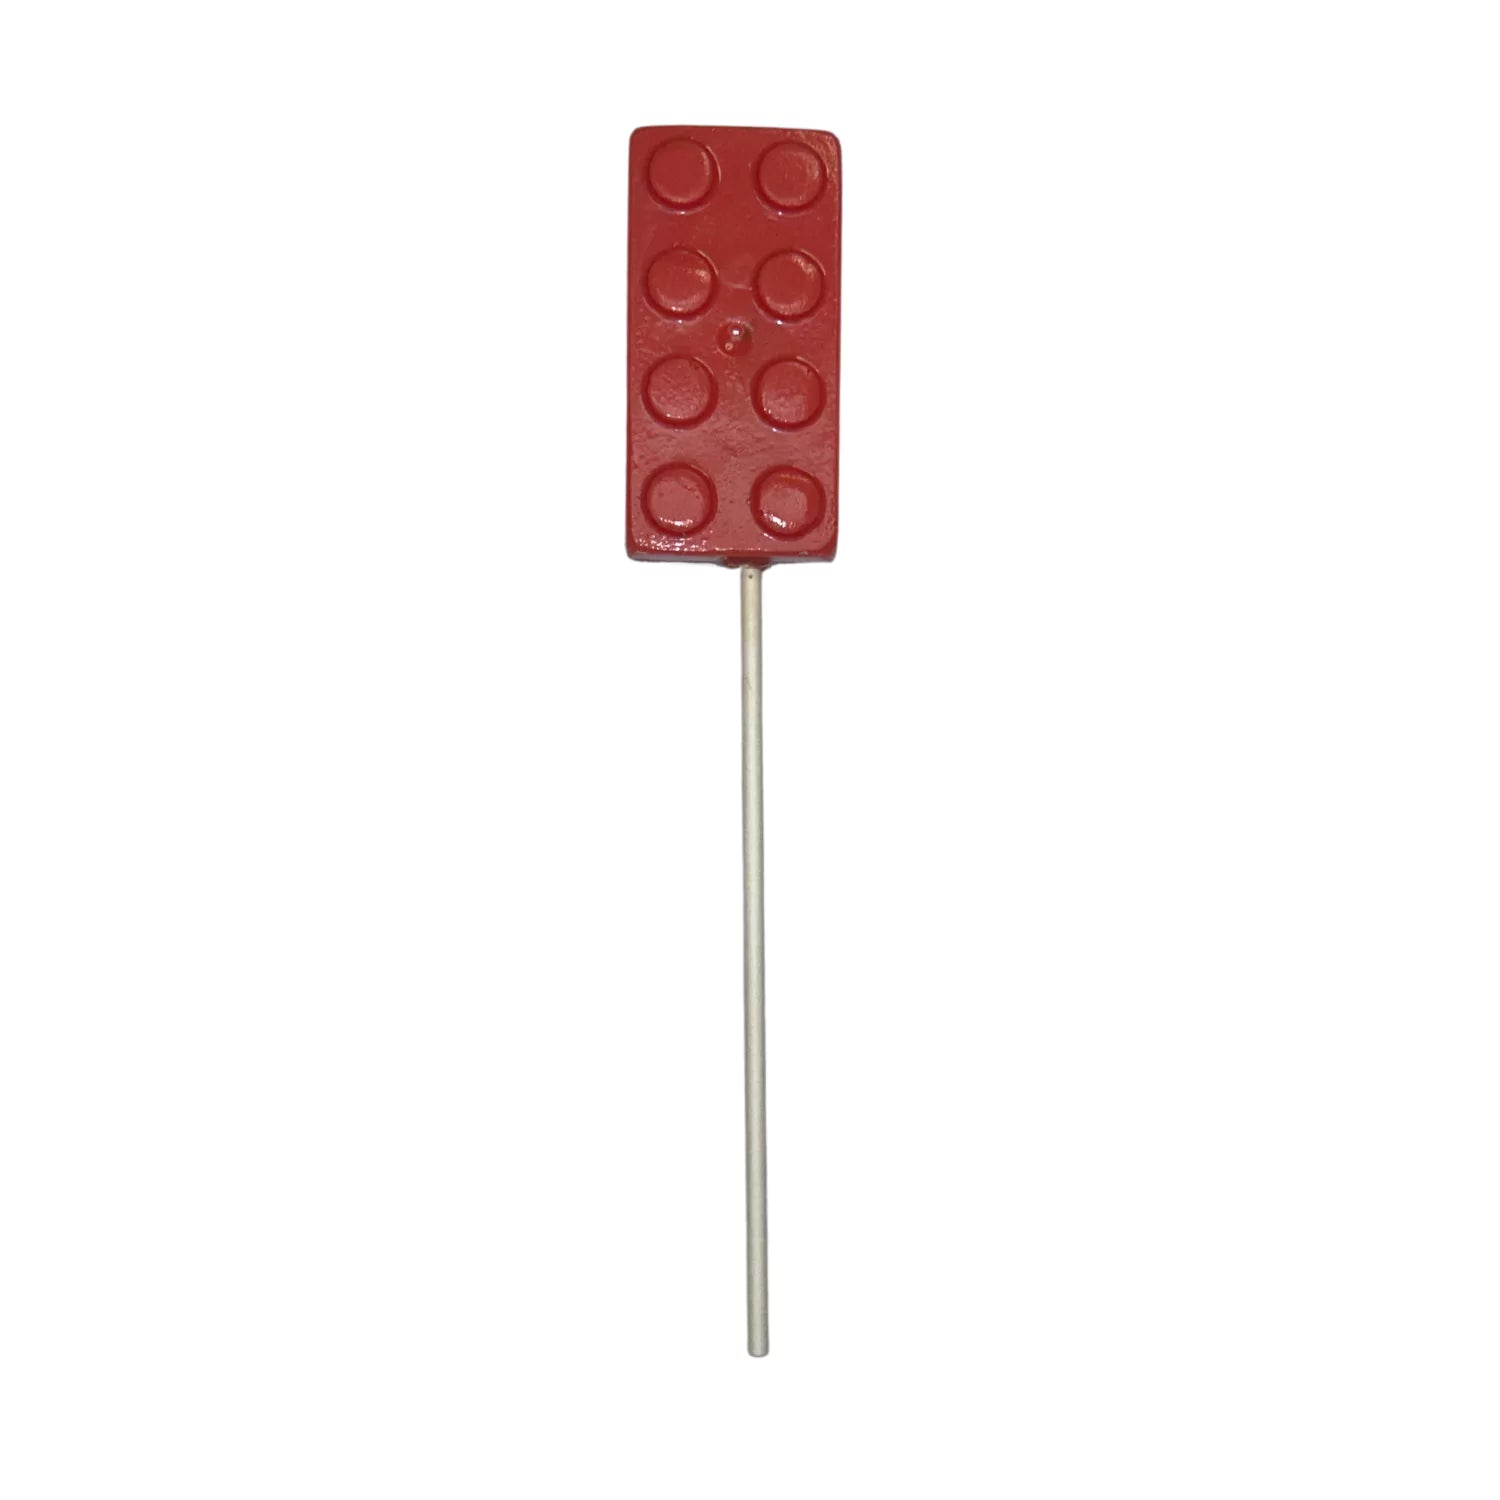 Assorted Colors Lego Brick Lollipop Sucker 0.9 oz White Chocolate Milk Chocolate Red